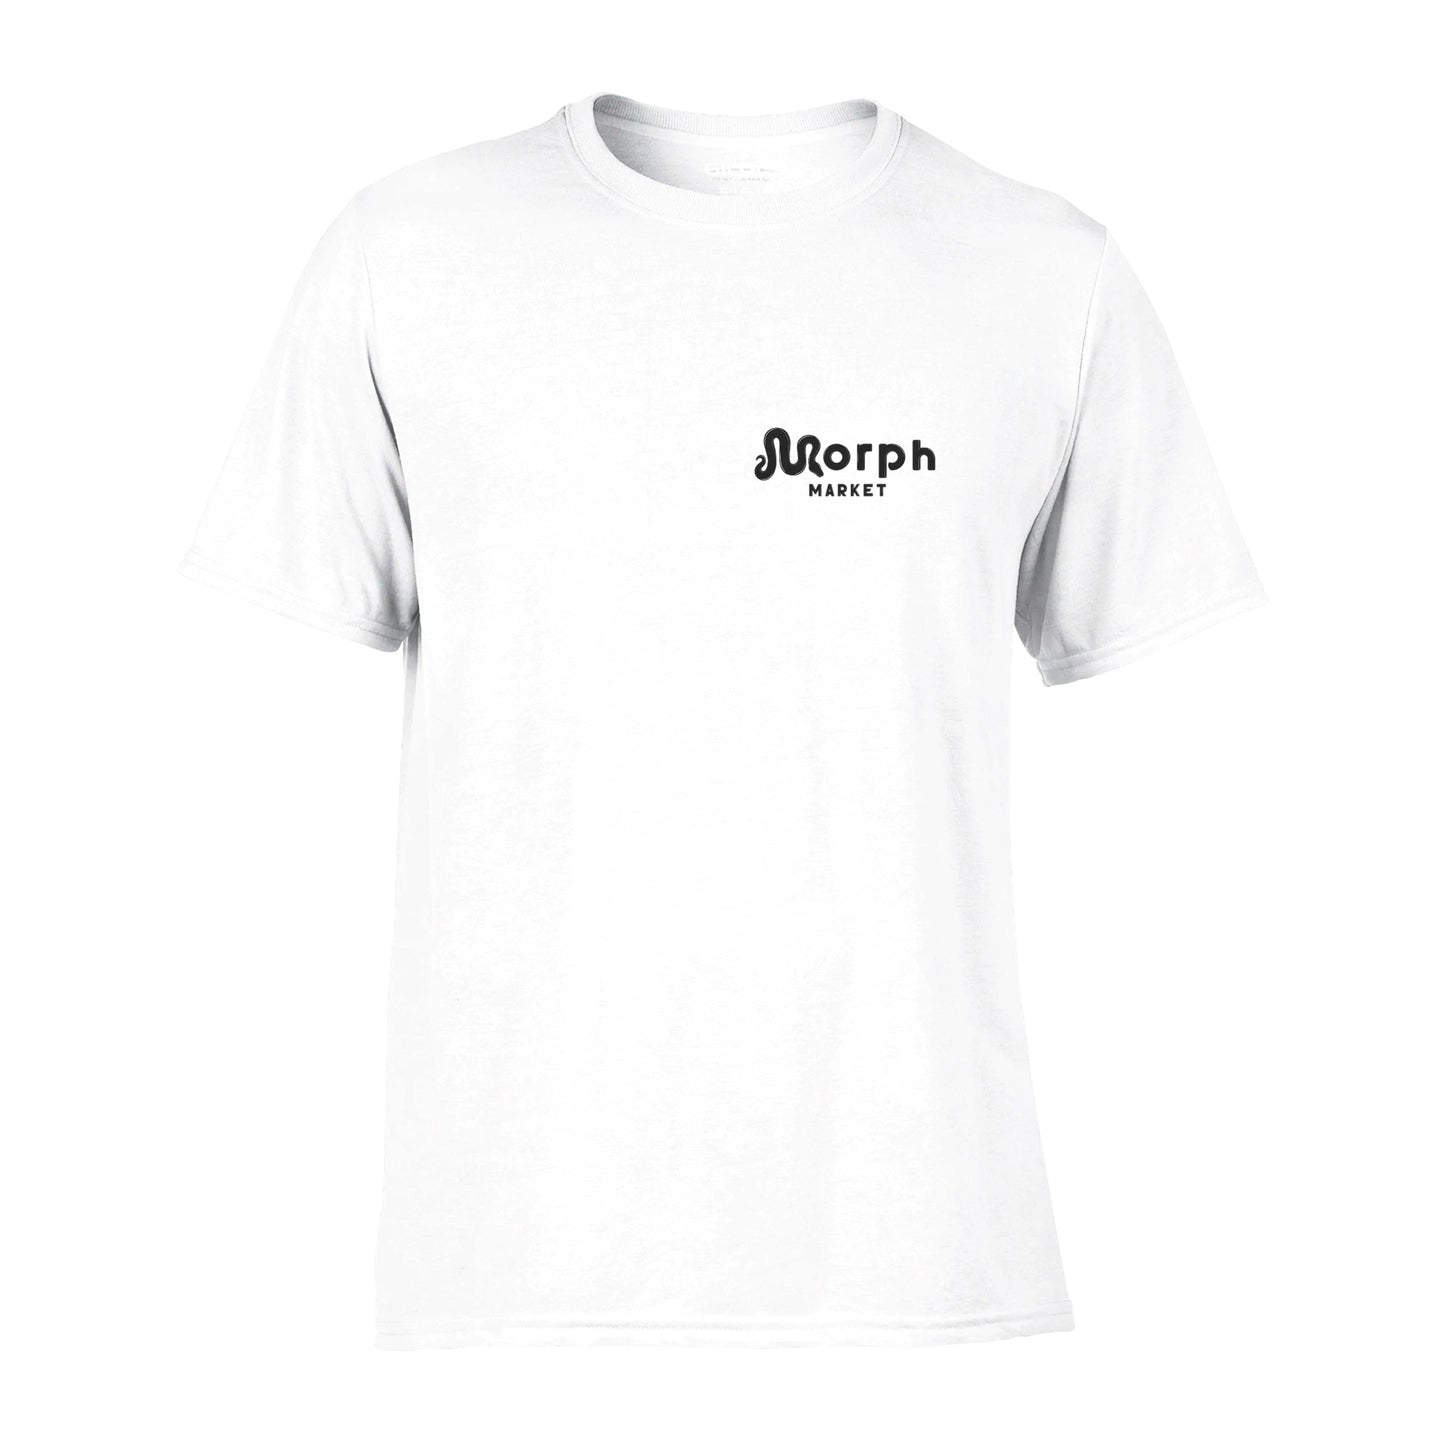 Morph Market (Dark) - Performance Unisex Crewneck T-shirt